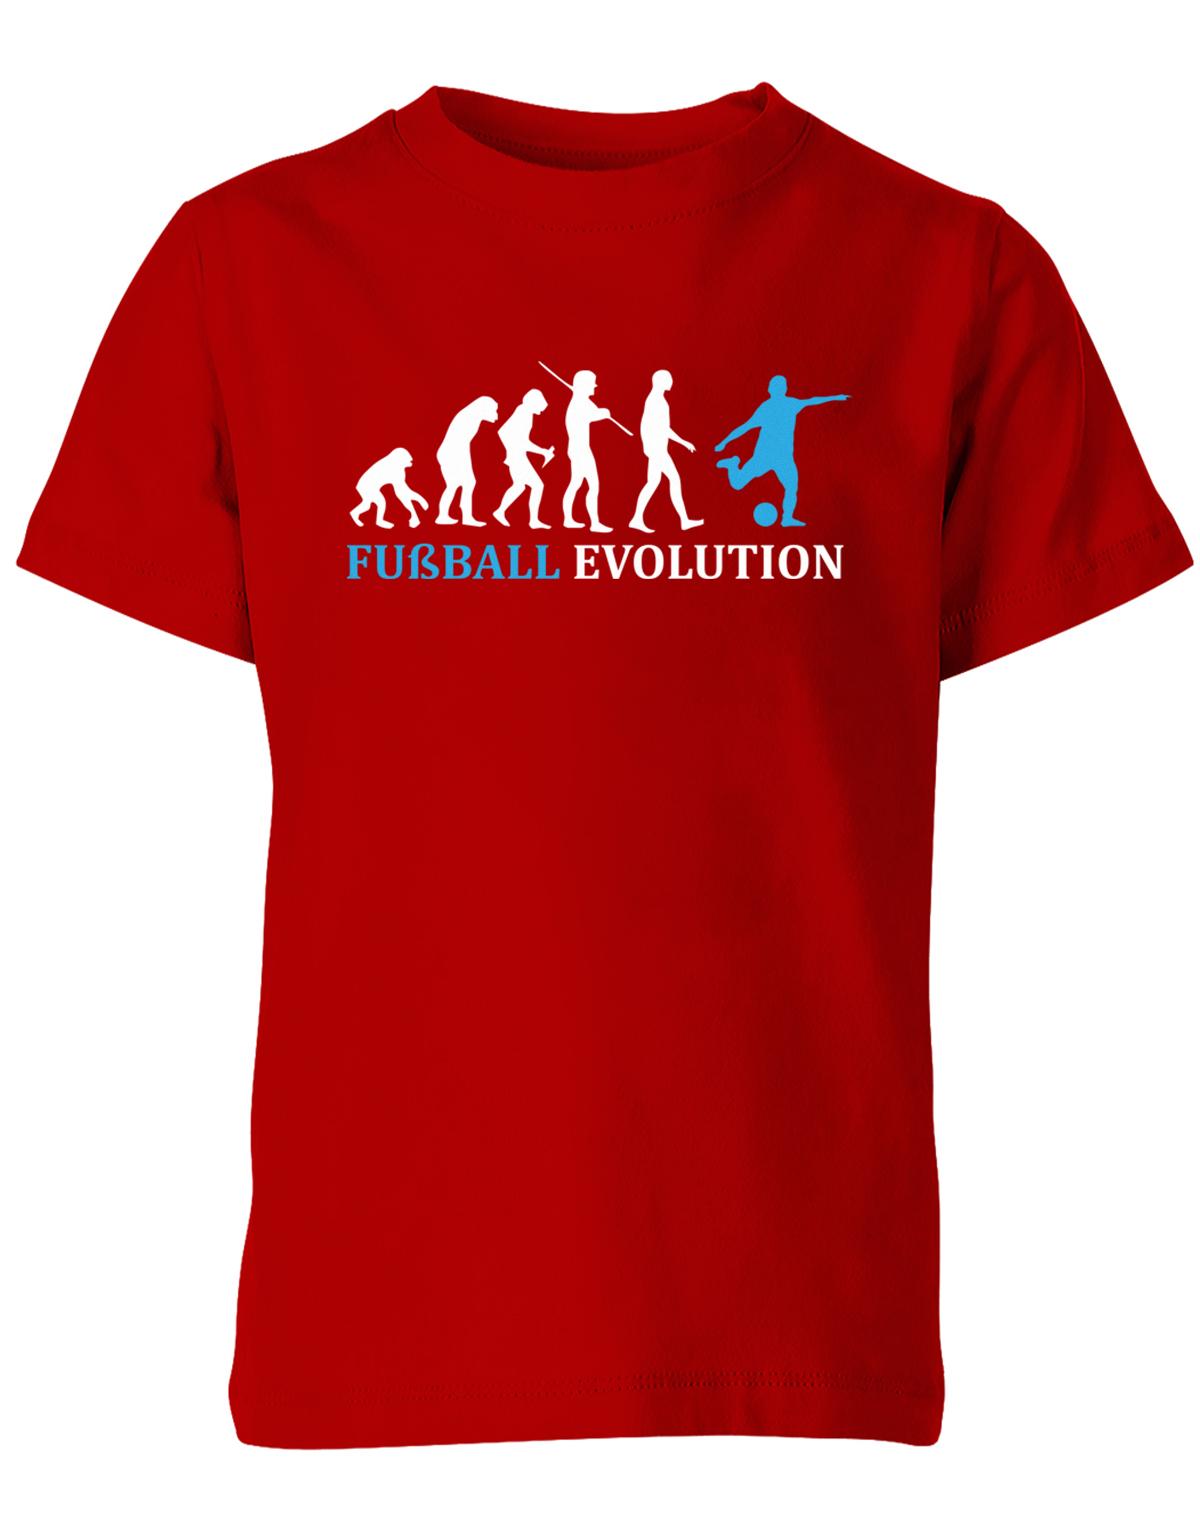 Fussball-Evolution-Kinder-Shirt-Rot-Hellblau